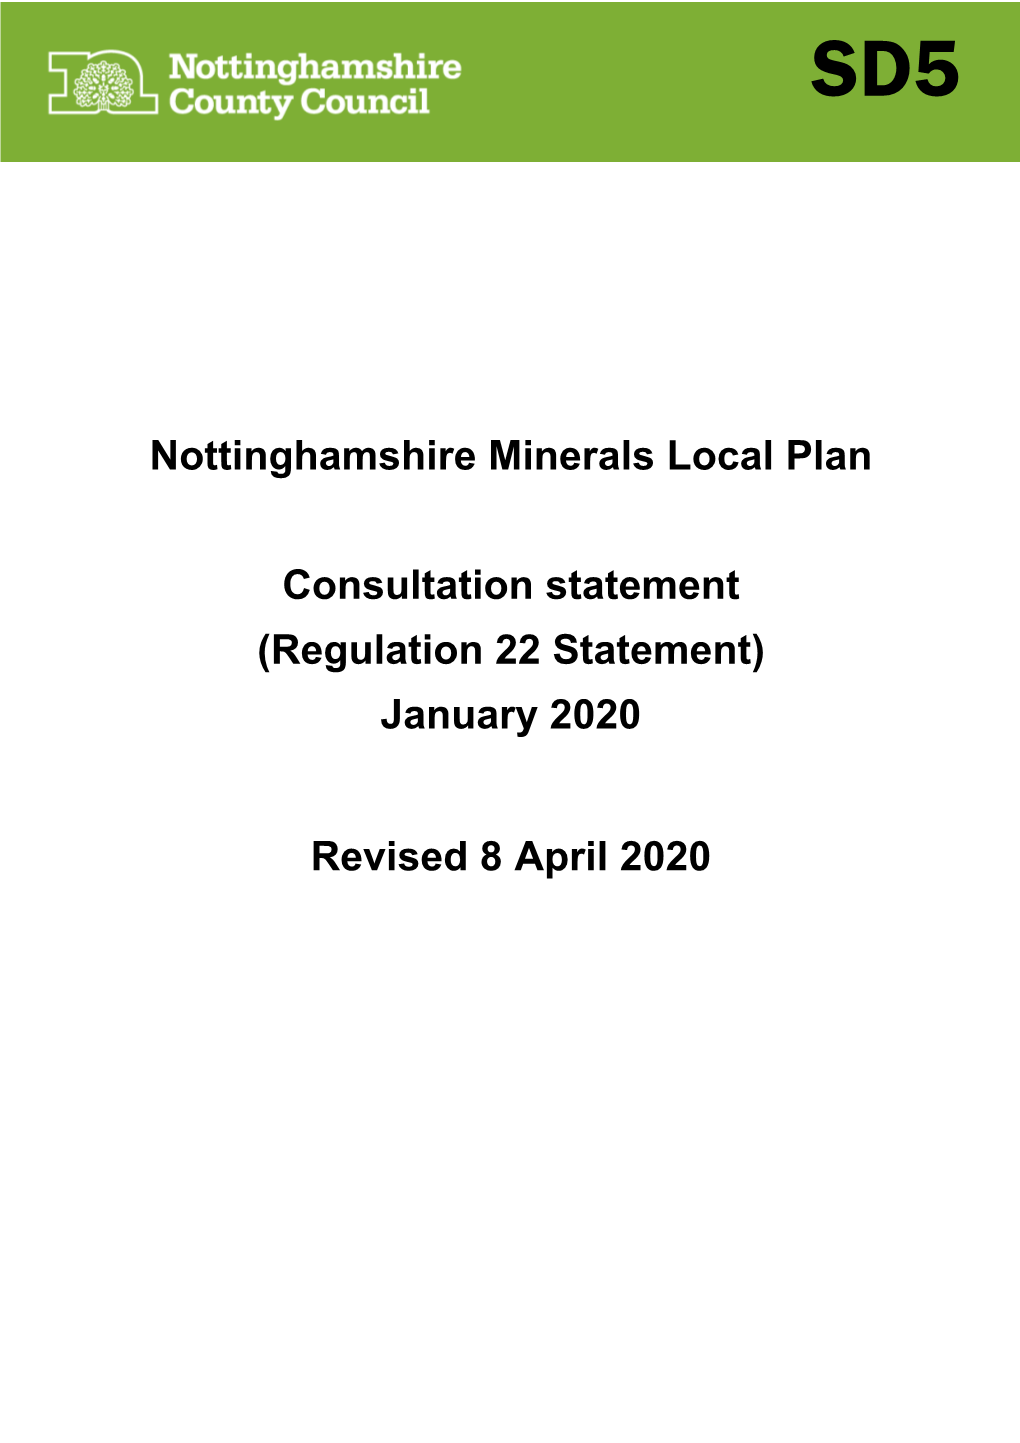 Nottinghamshire Minerals Local Plan Consultation Statement